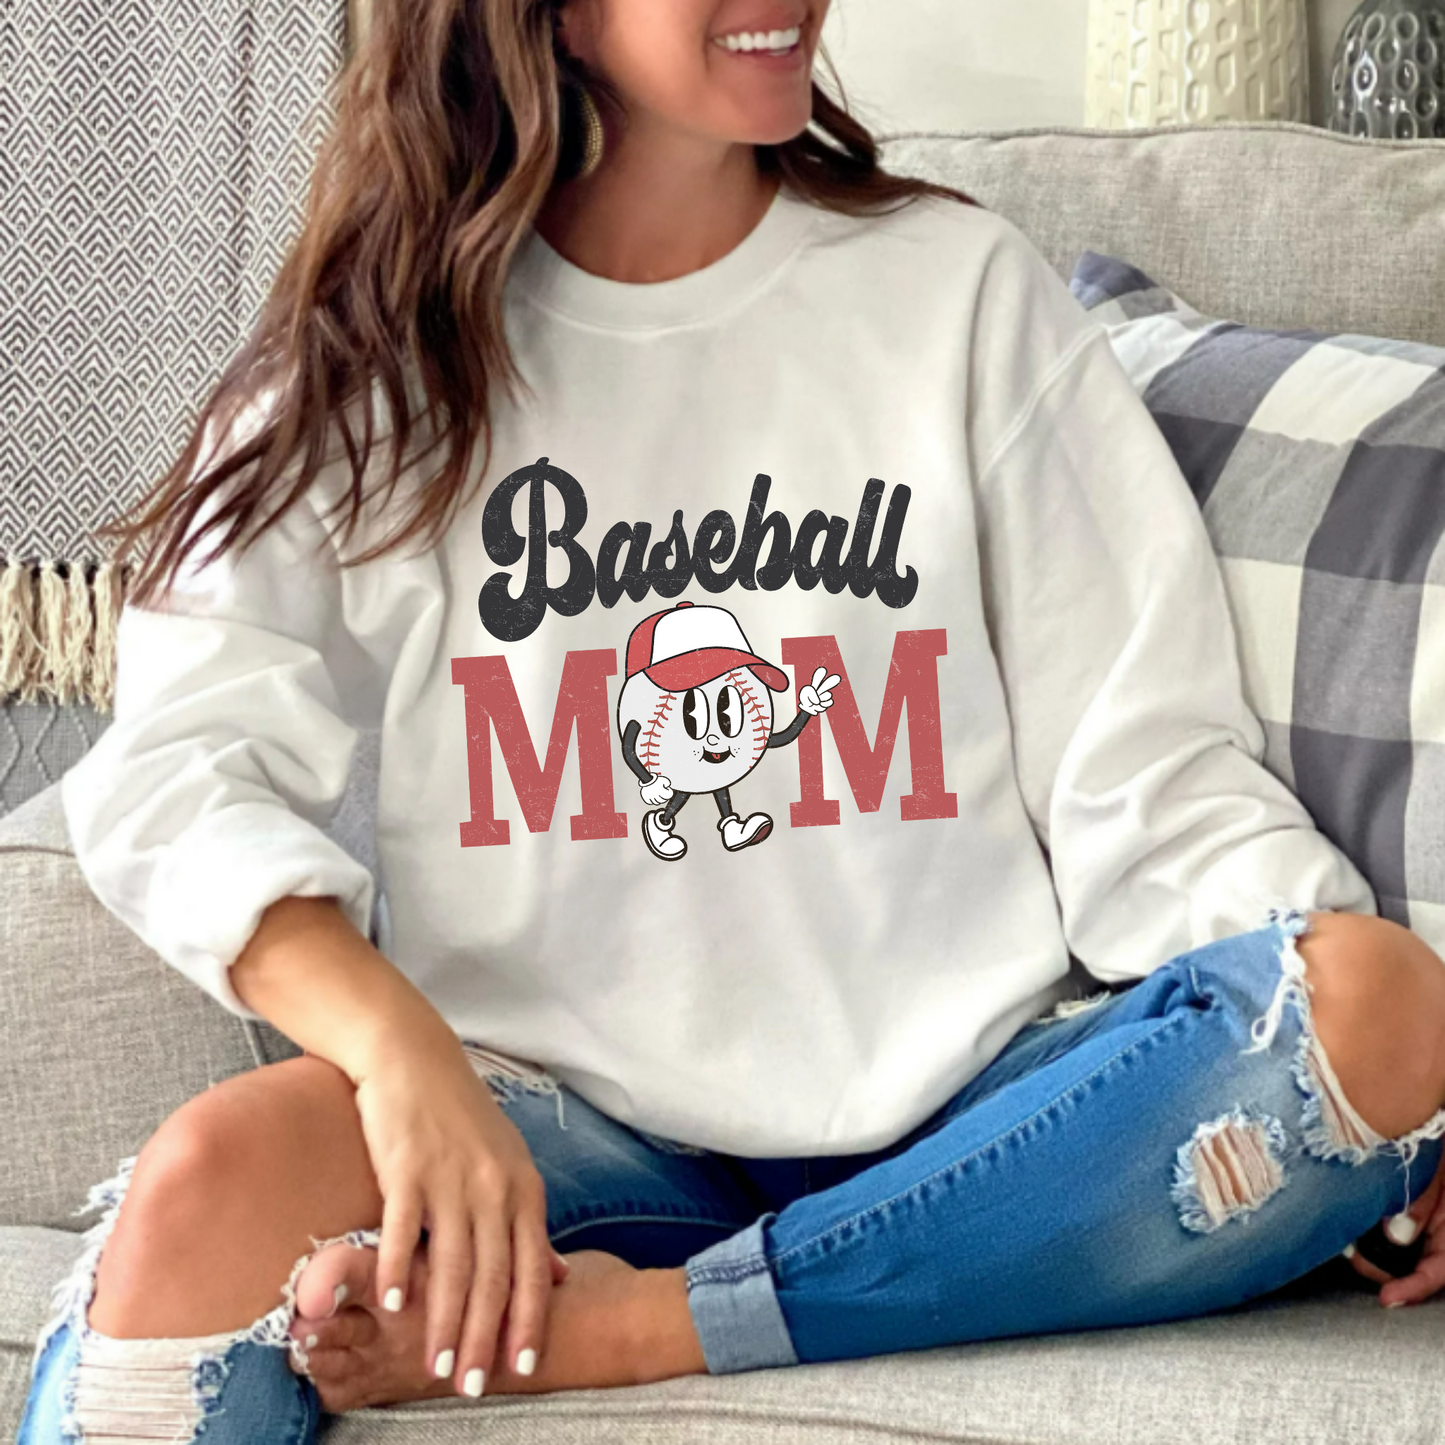 (shirt not included) Baseball MOM  - Clear Film Transfer